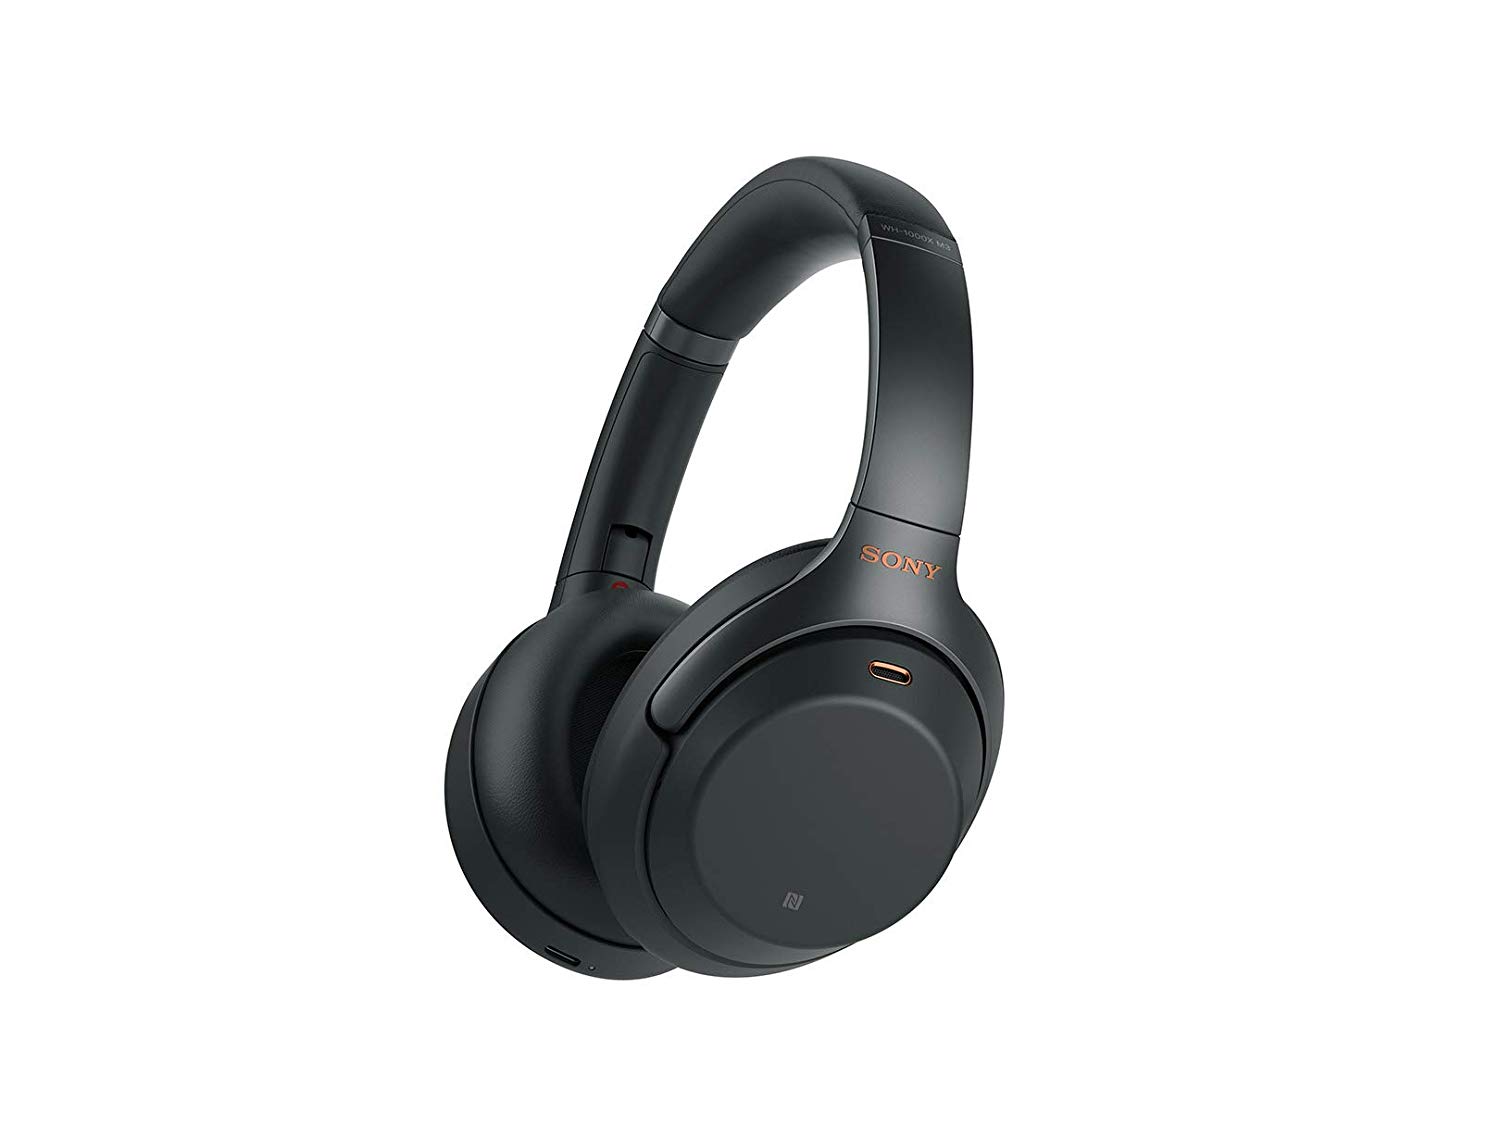 Sony WH-1000XM3 Bluetooth Wireless Over-Ear-Kopfhörer mit Mikrofon und NFC – Geräuschunterdrückung